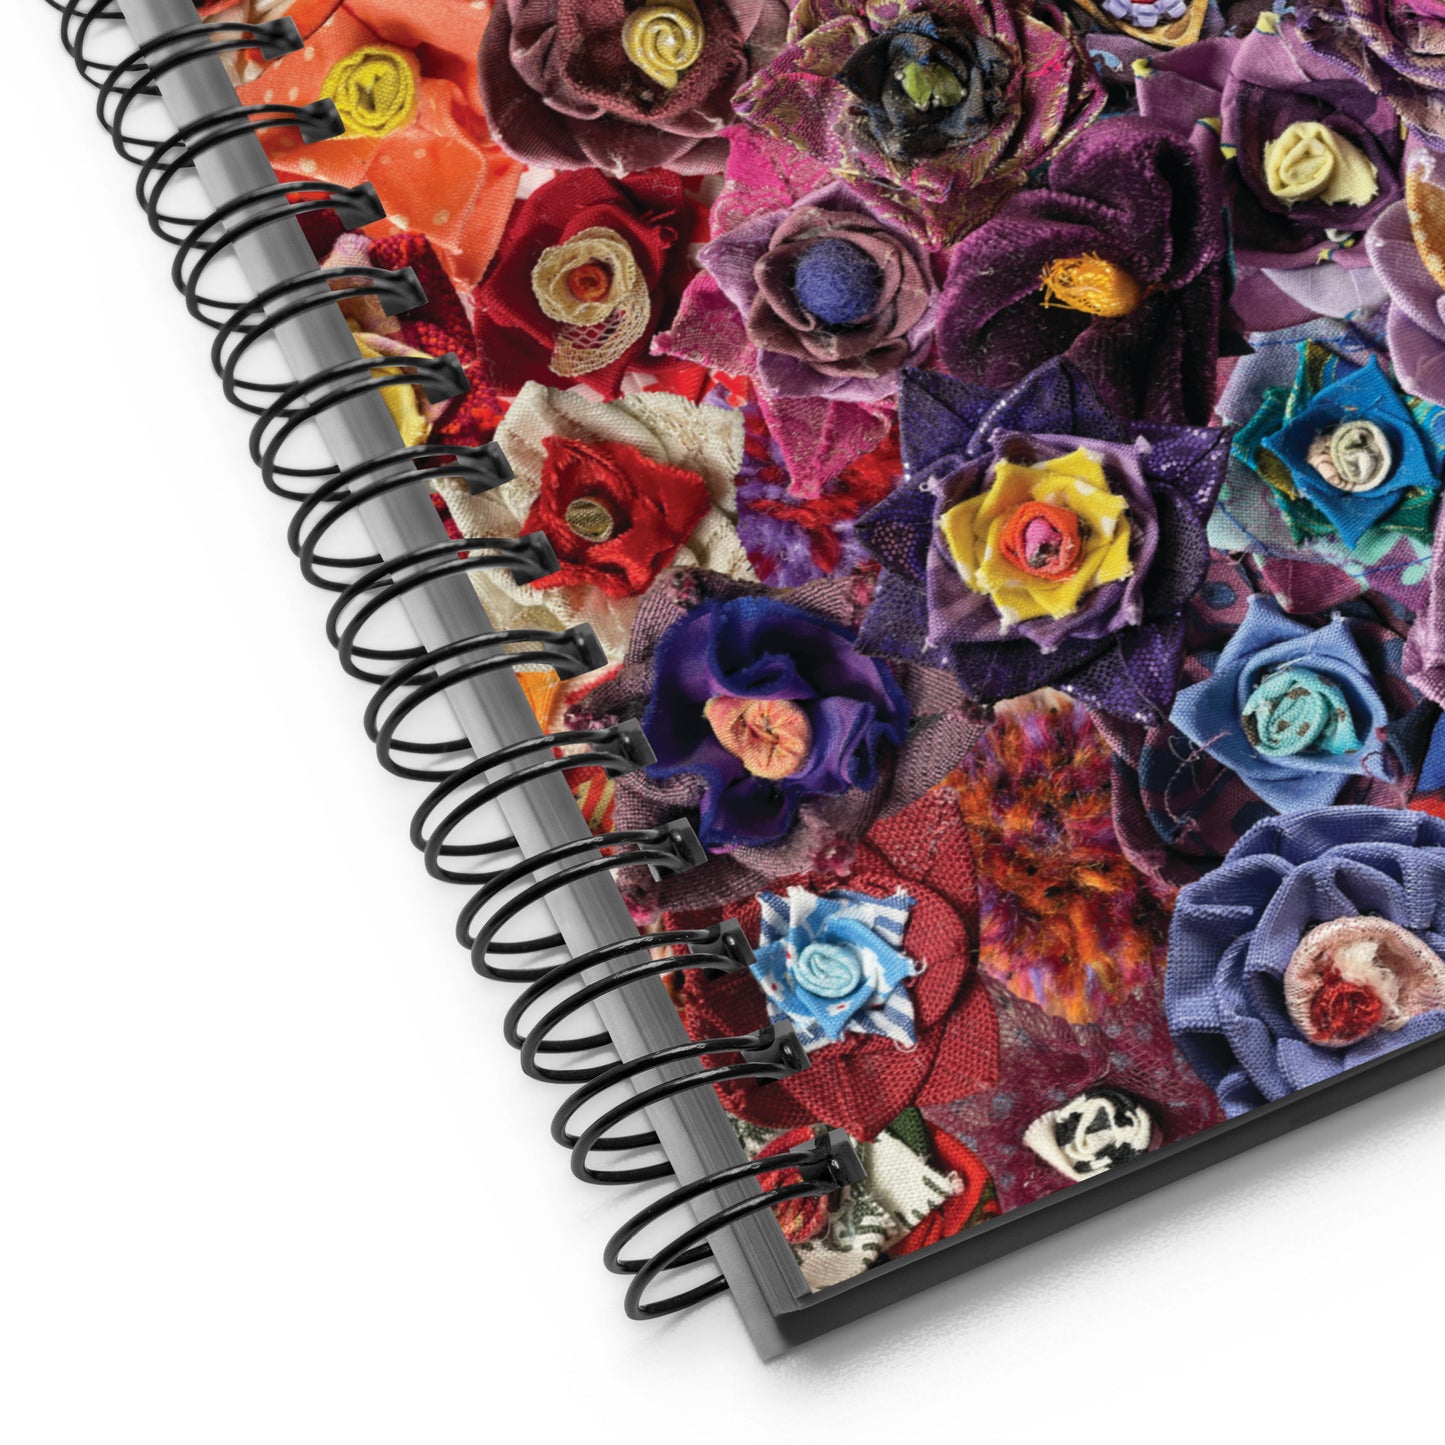 Notebook - Purple Flowers